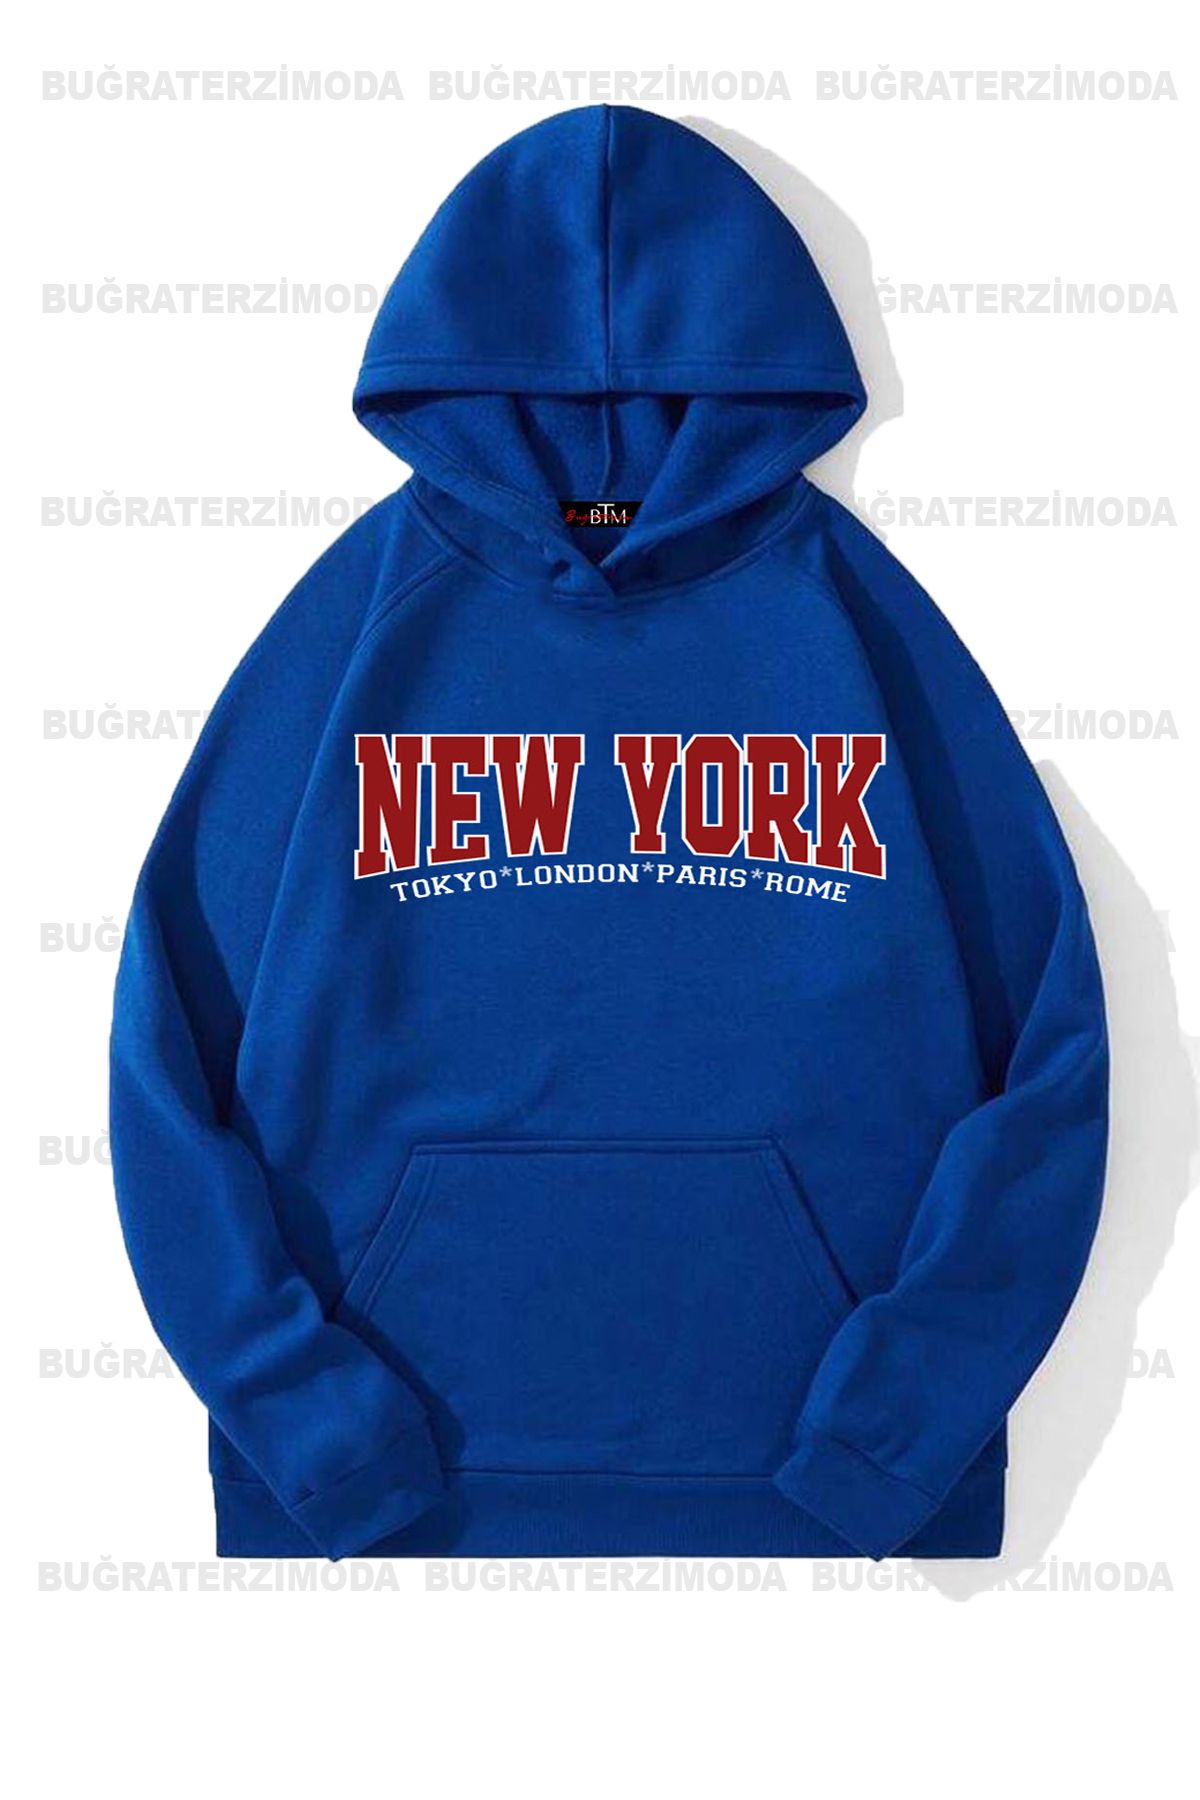 Buğraterzimoda New York Printed Unisex Saks Blue Hooded Sweatshirt